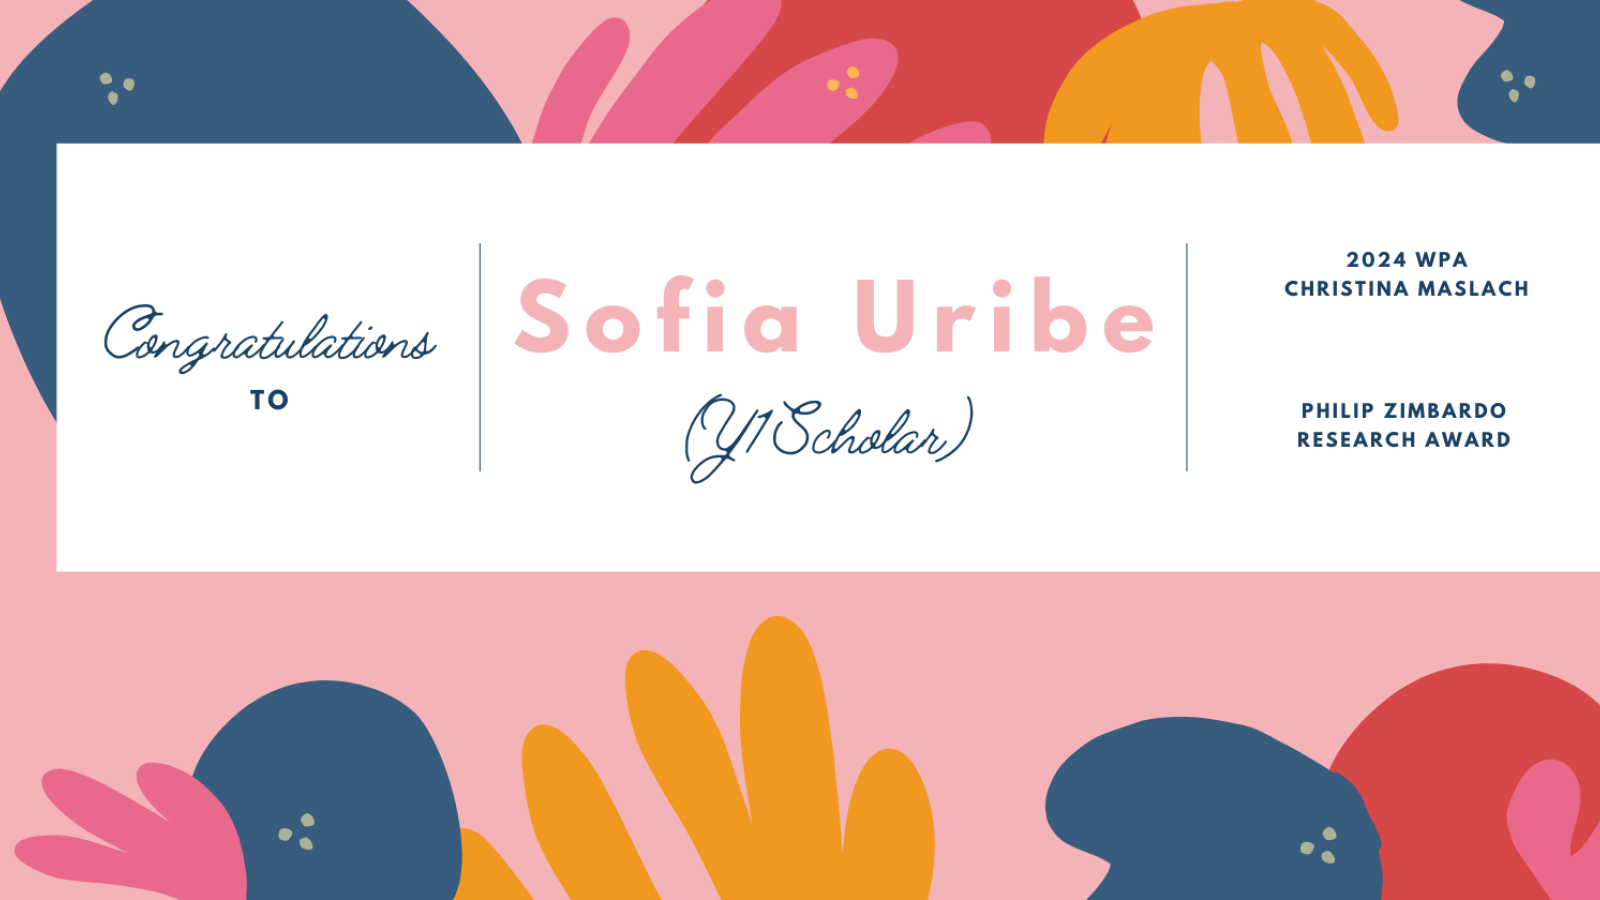 Congratulations - Sofia Uribe - 2024 WPA Christina Maslach - Banner